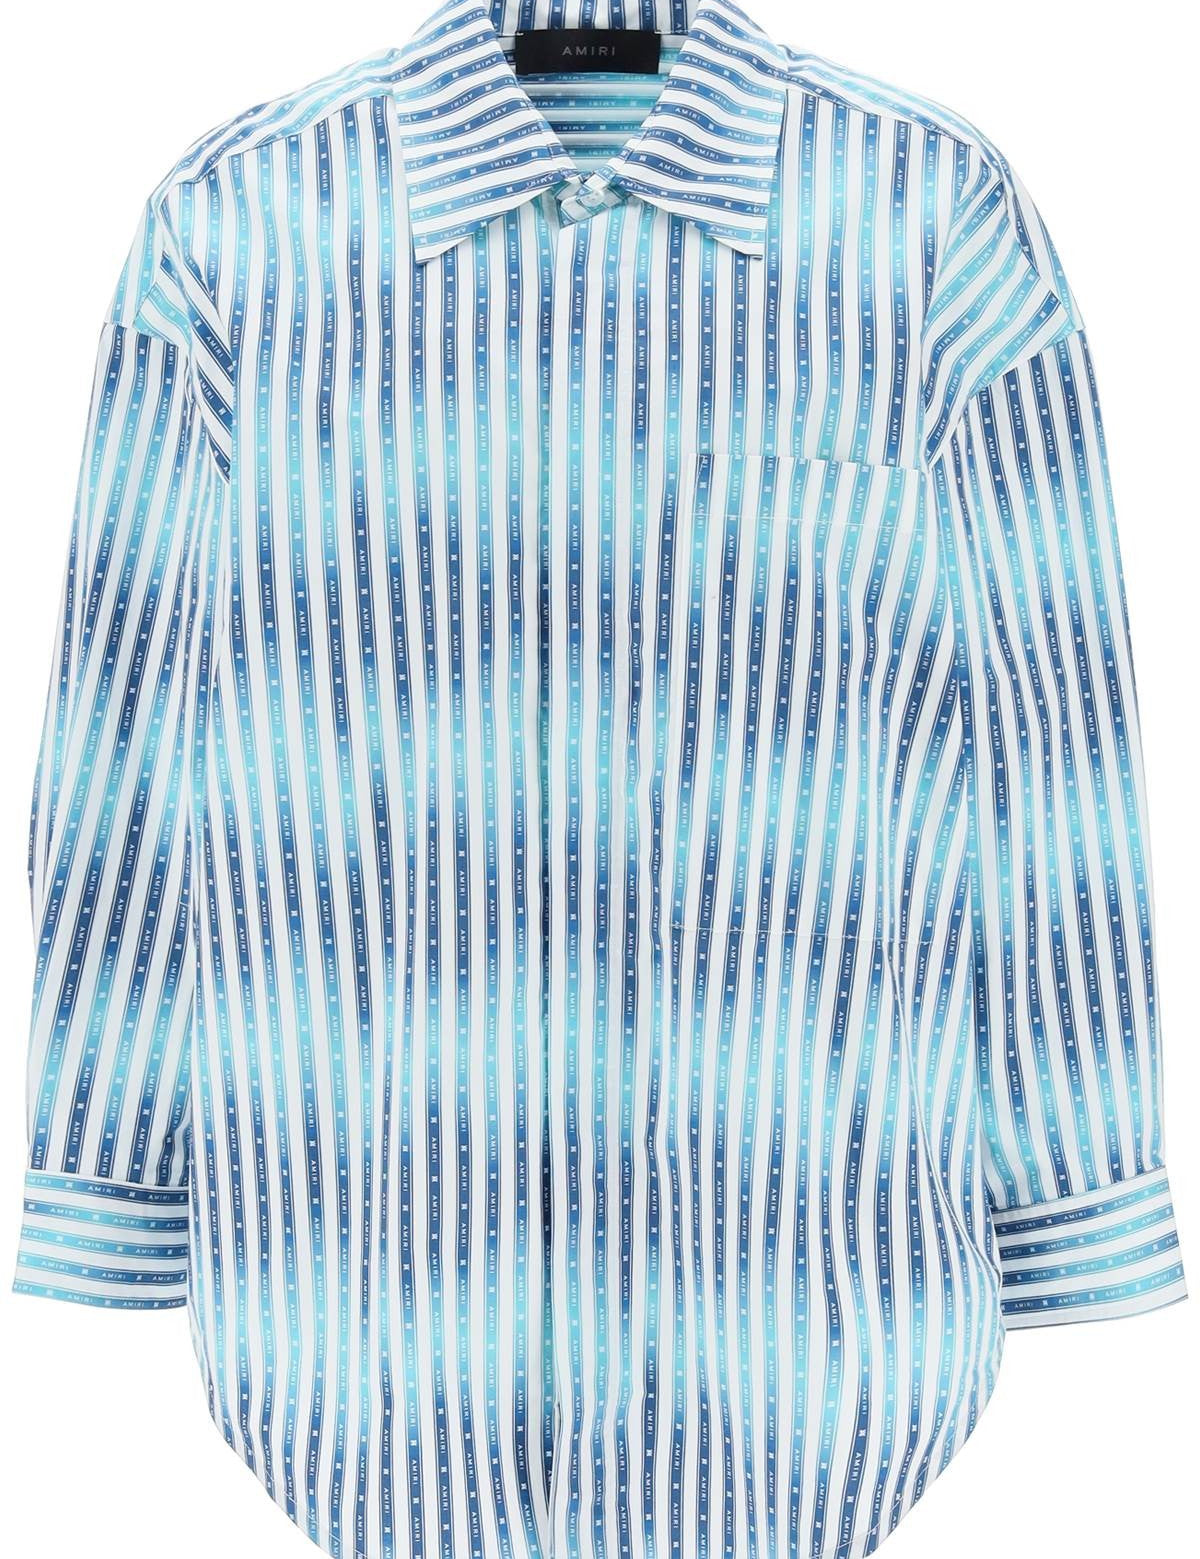 amiri-oversized-striped-shirt.jpg